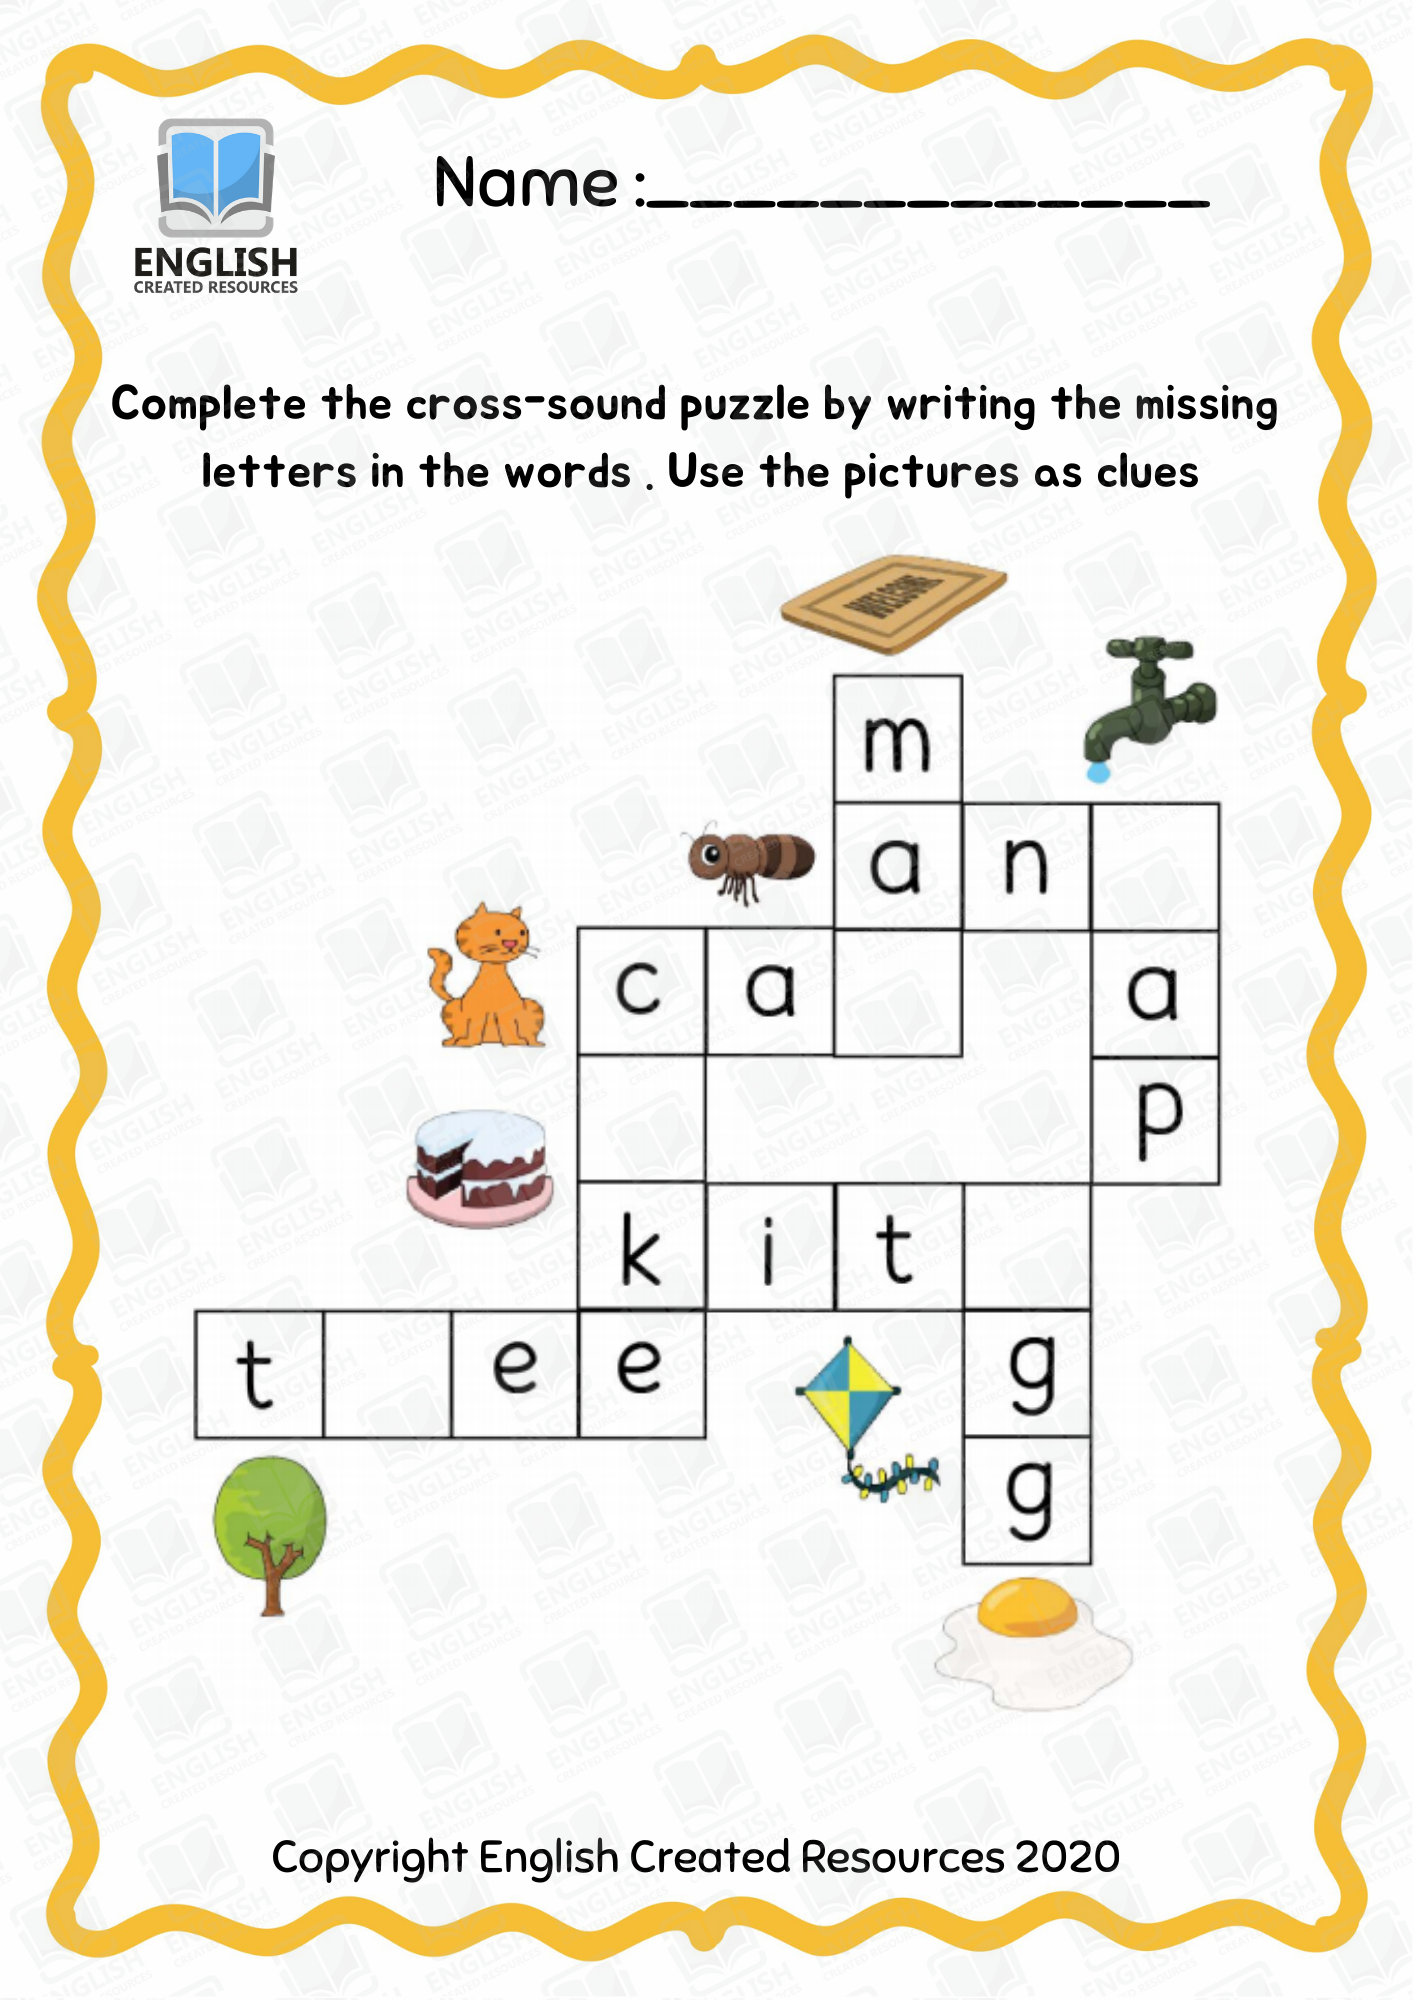 Kindergarten Crossword Puzzle English Created Resources